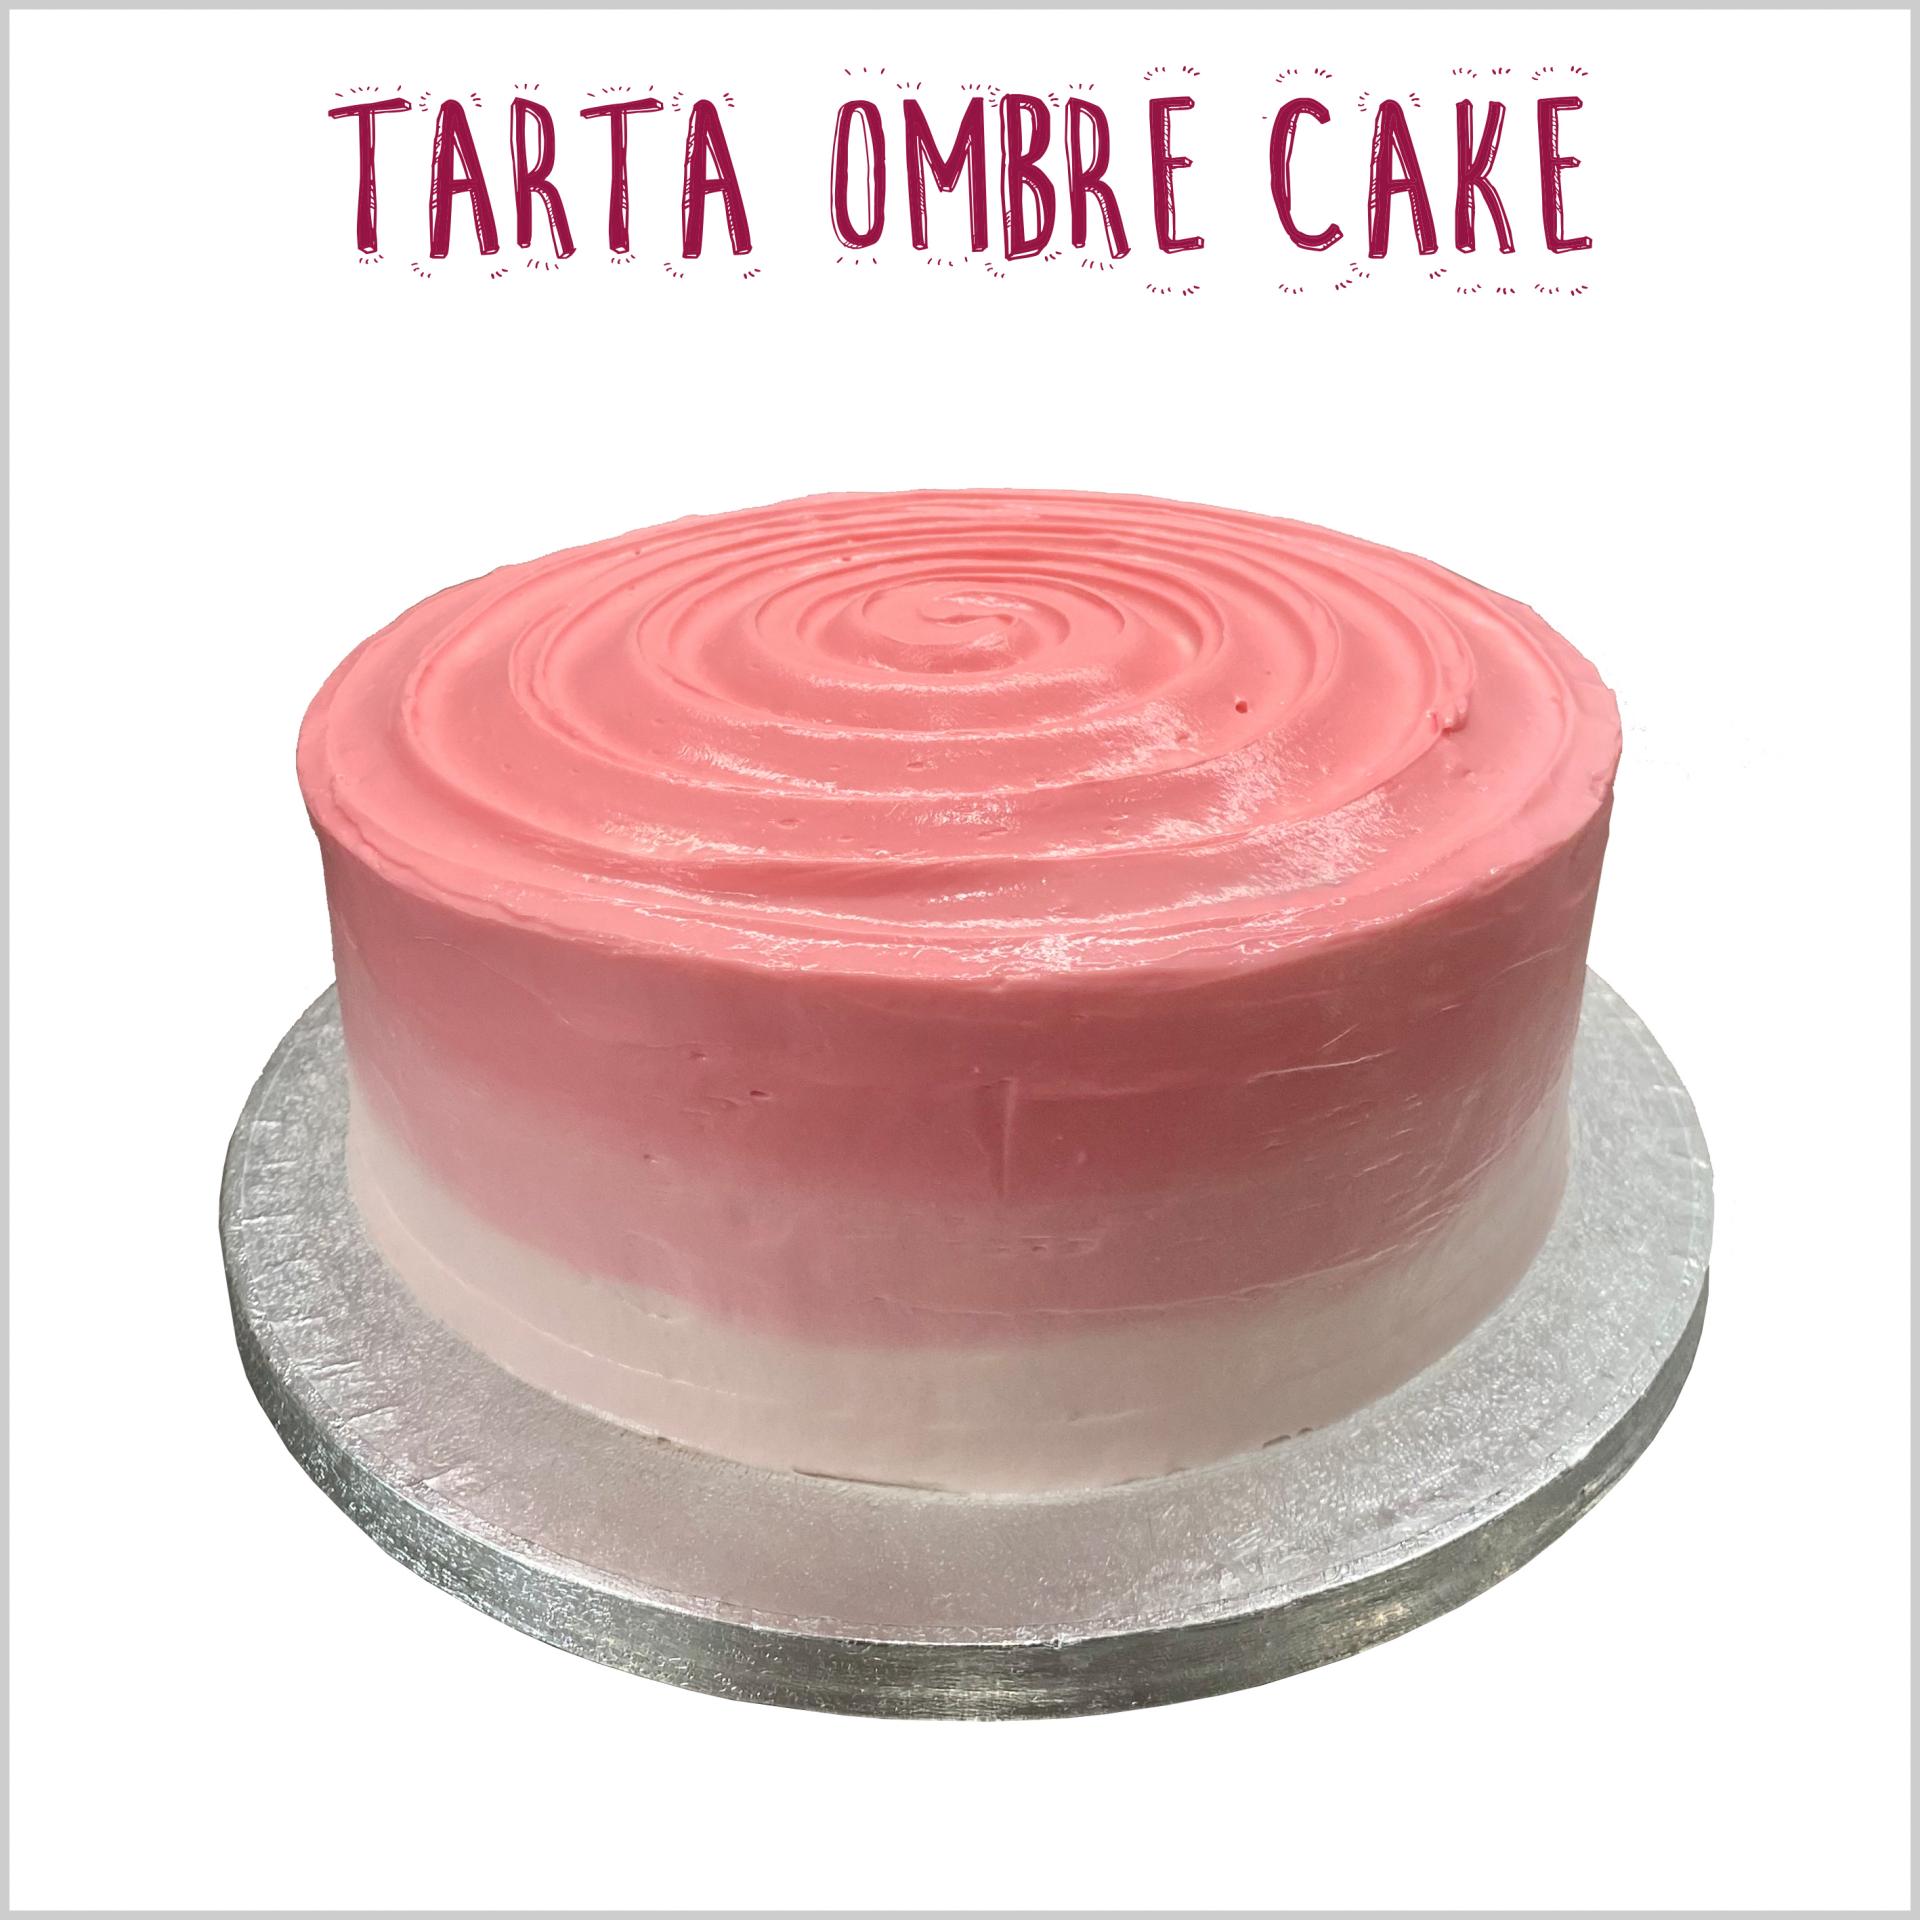 Tarta Ombre Cake